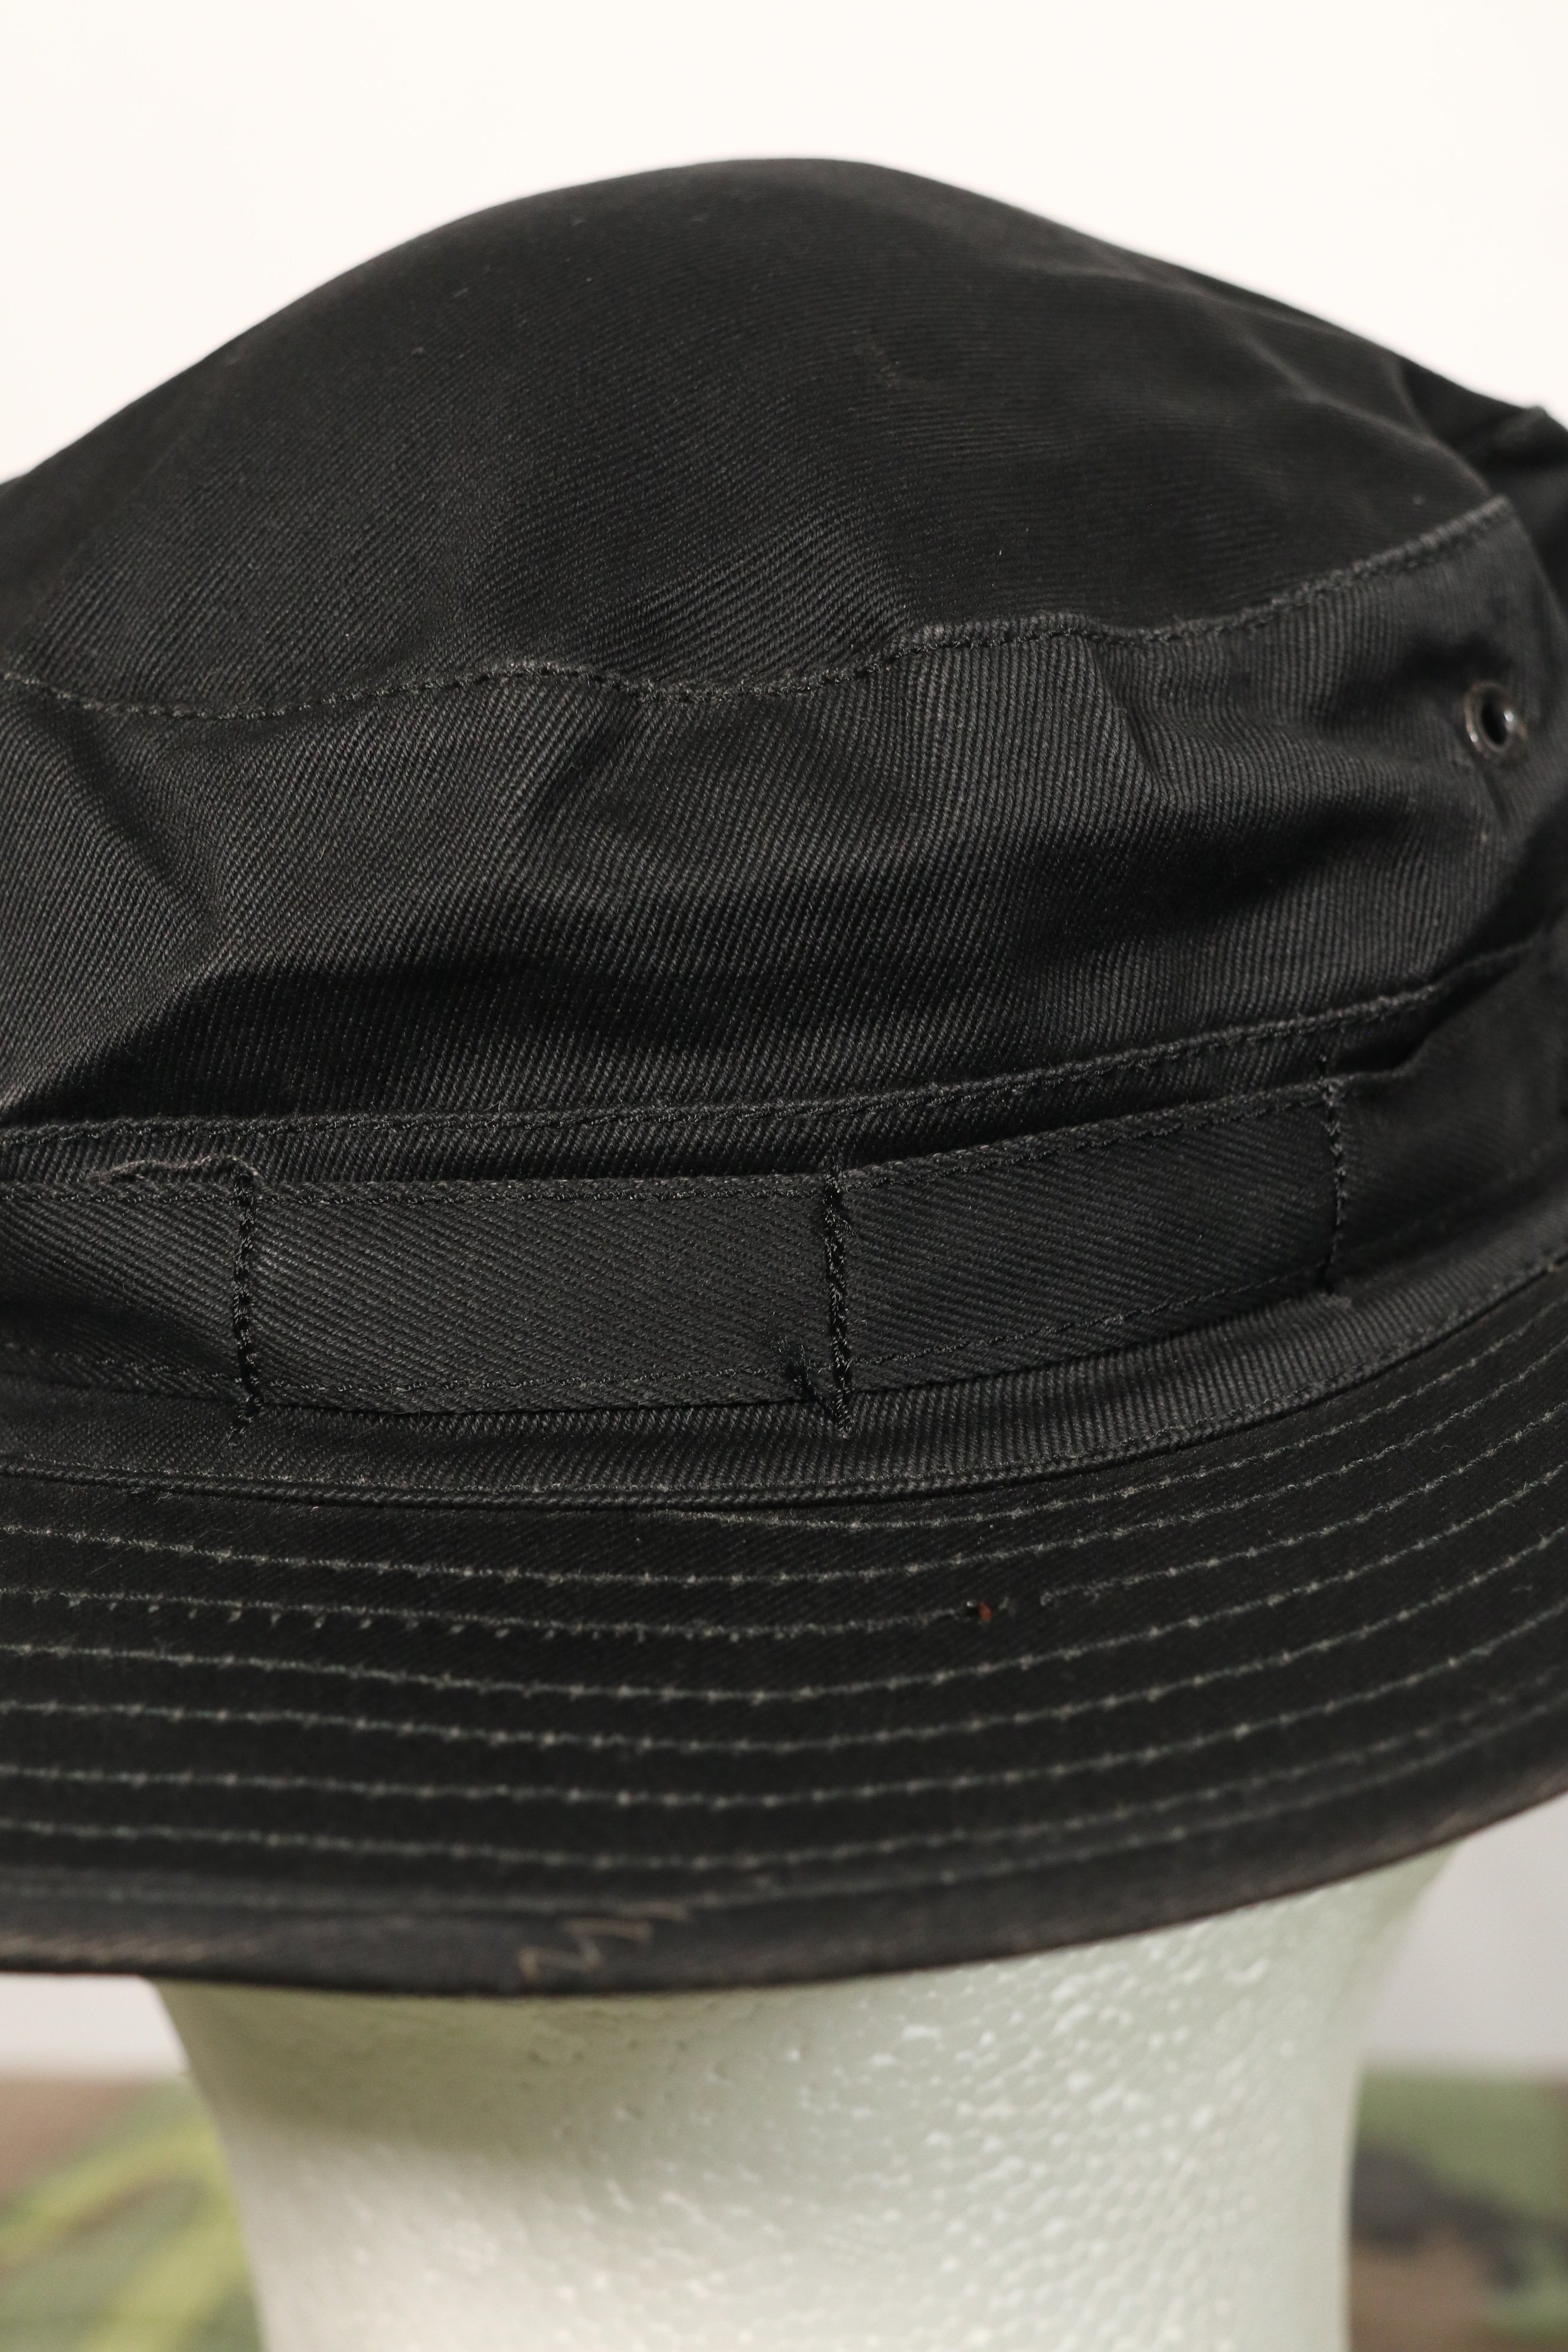 Real Okinawa CISO Test Sample Black Boonei Hat Ben Baker Takeaway